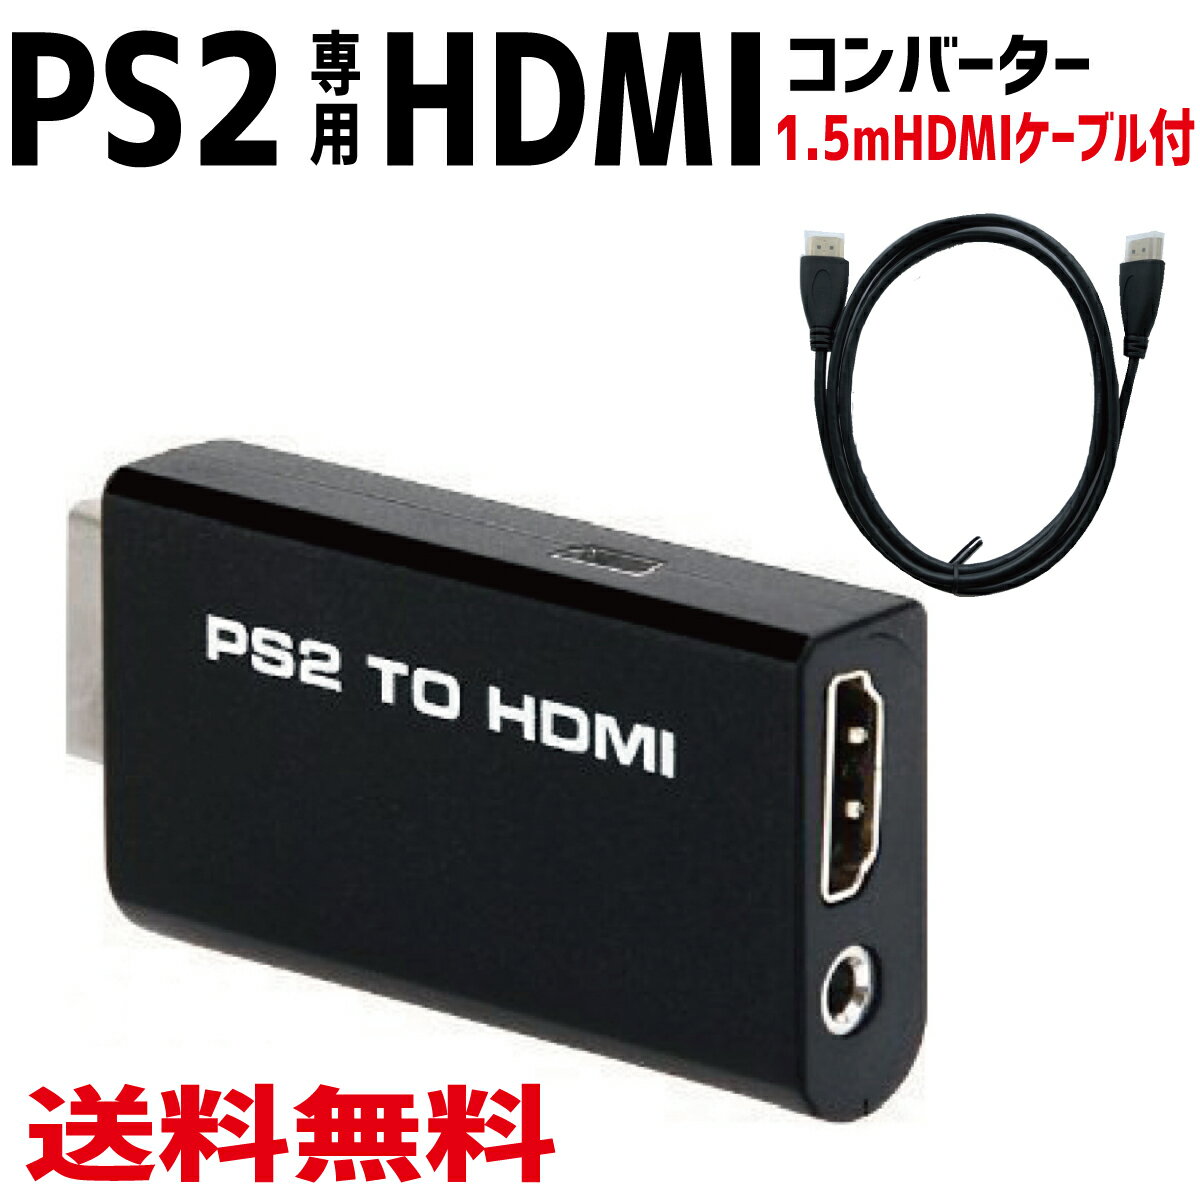 PS2 TO HDMI Ro[^[ PS2p PS2 to HDMI ڑRlN^ ϊ A v^[ 1.5mHDMIP[ut